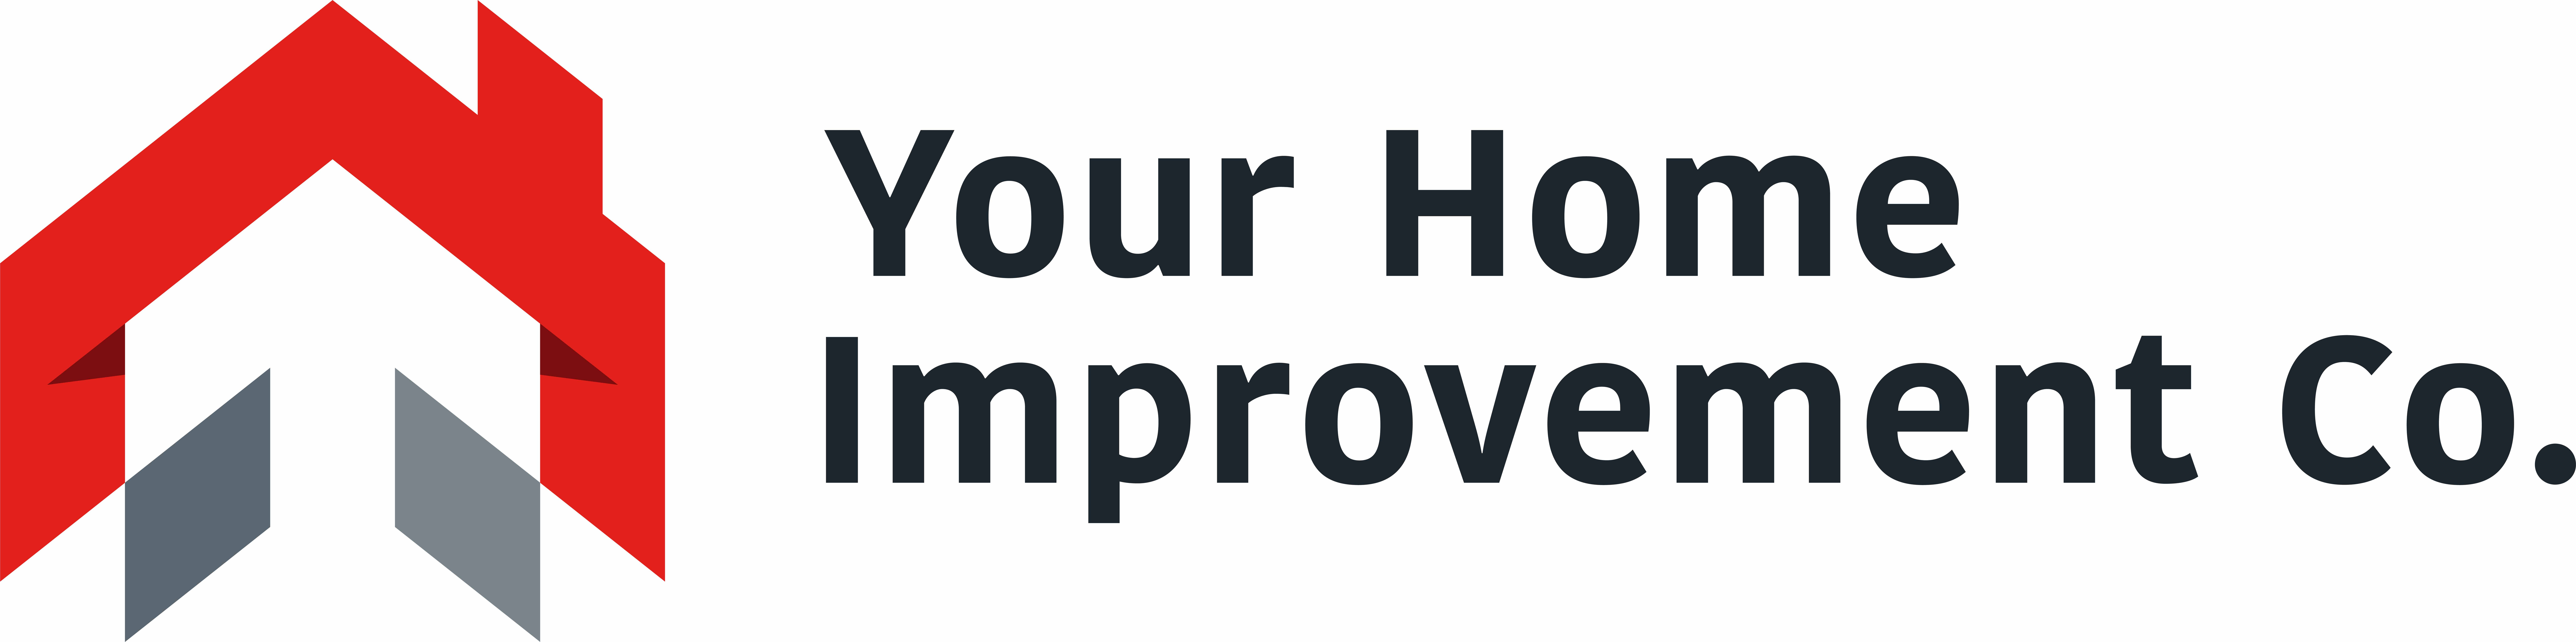 Your Home Improvement Company Logo